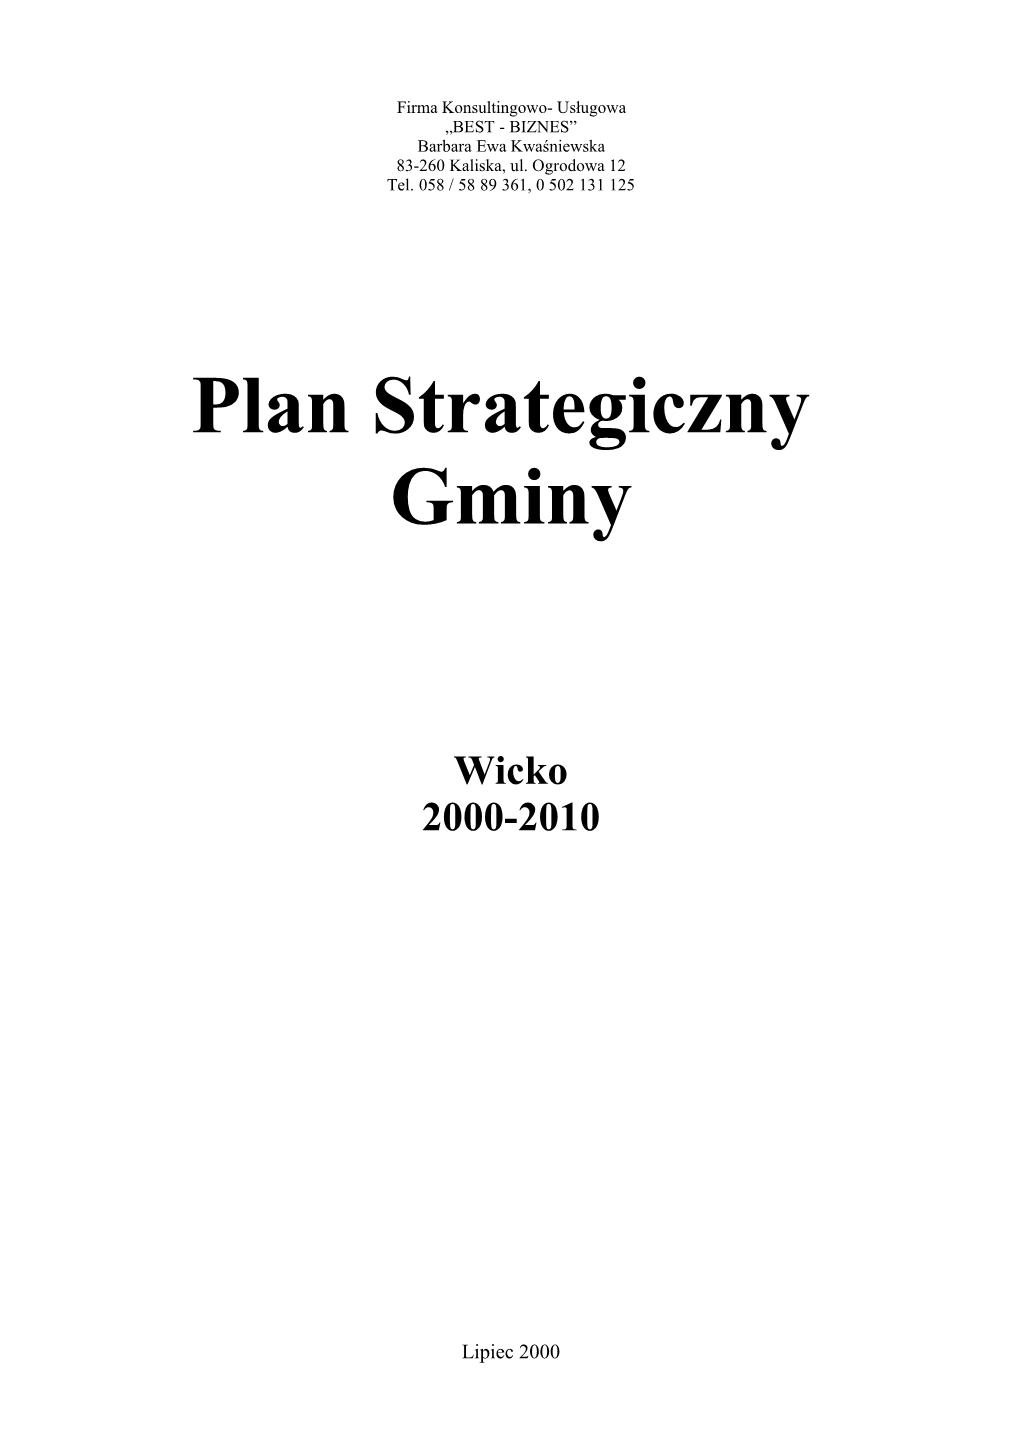 Plan Strategiczny Gminy